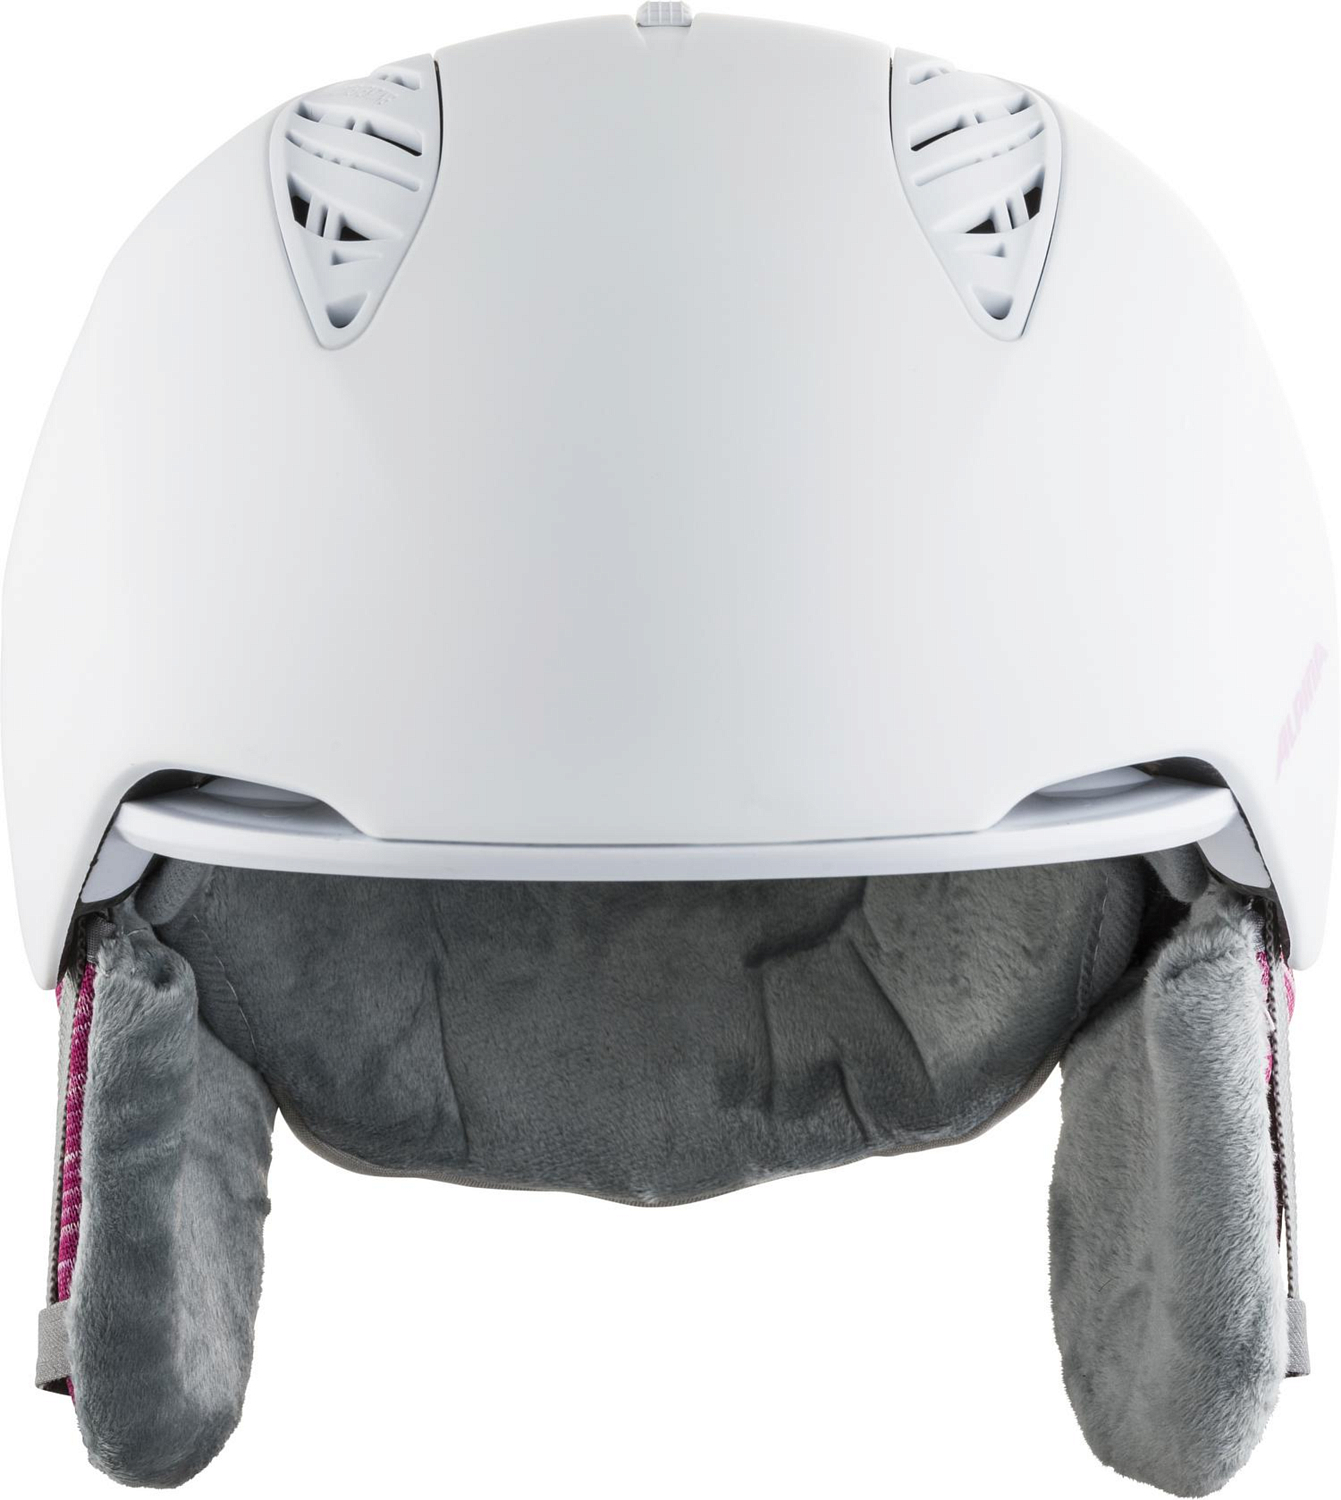 Зимний Шлем Alpina 2022-23 Grand White-Rose Matt